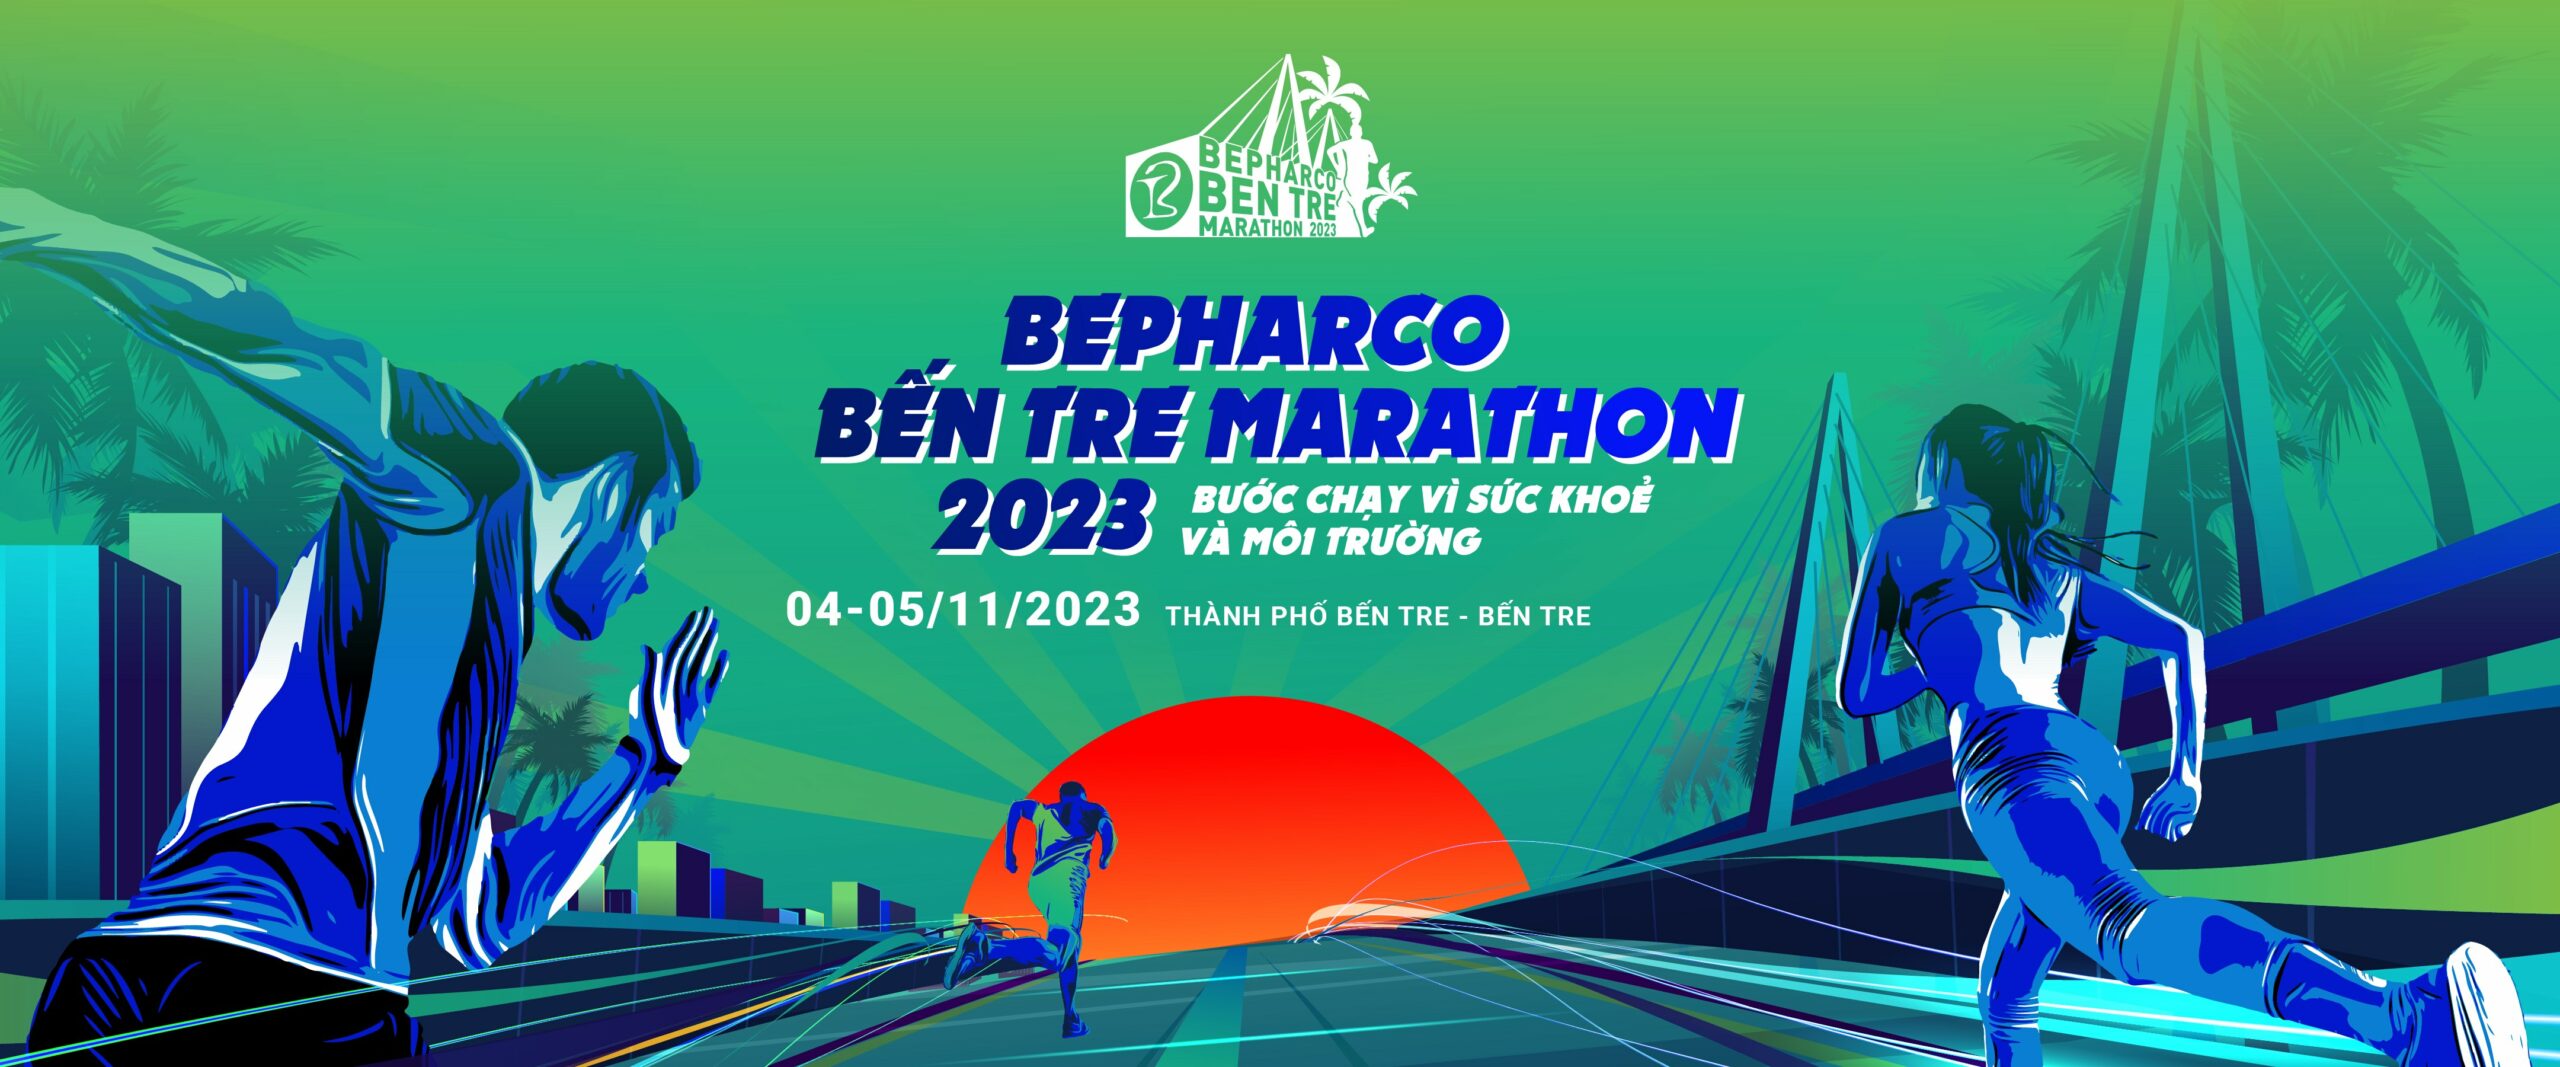 Bepharco Bến Tre Marathon 2023 - ben tre marathon 2023 scaled